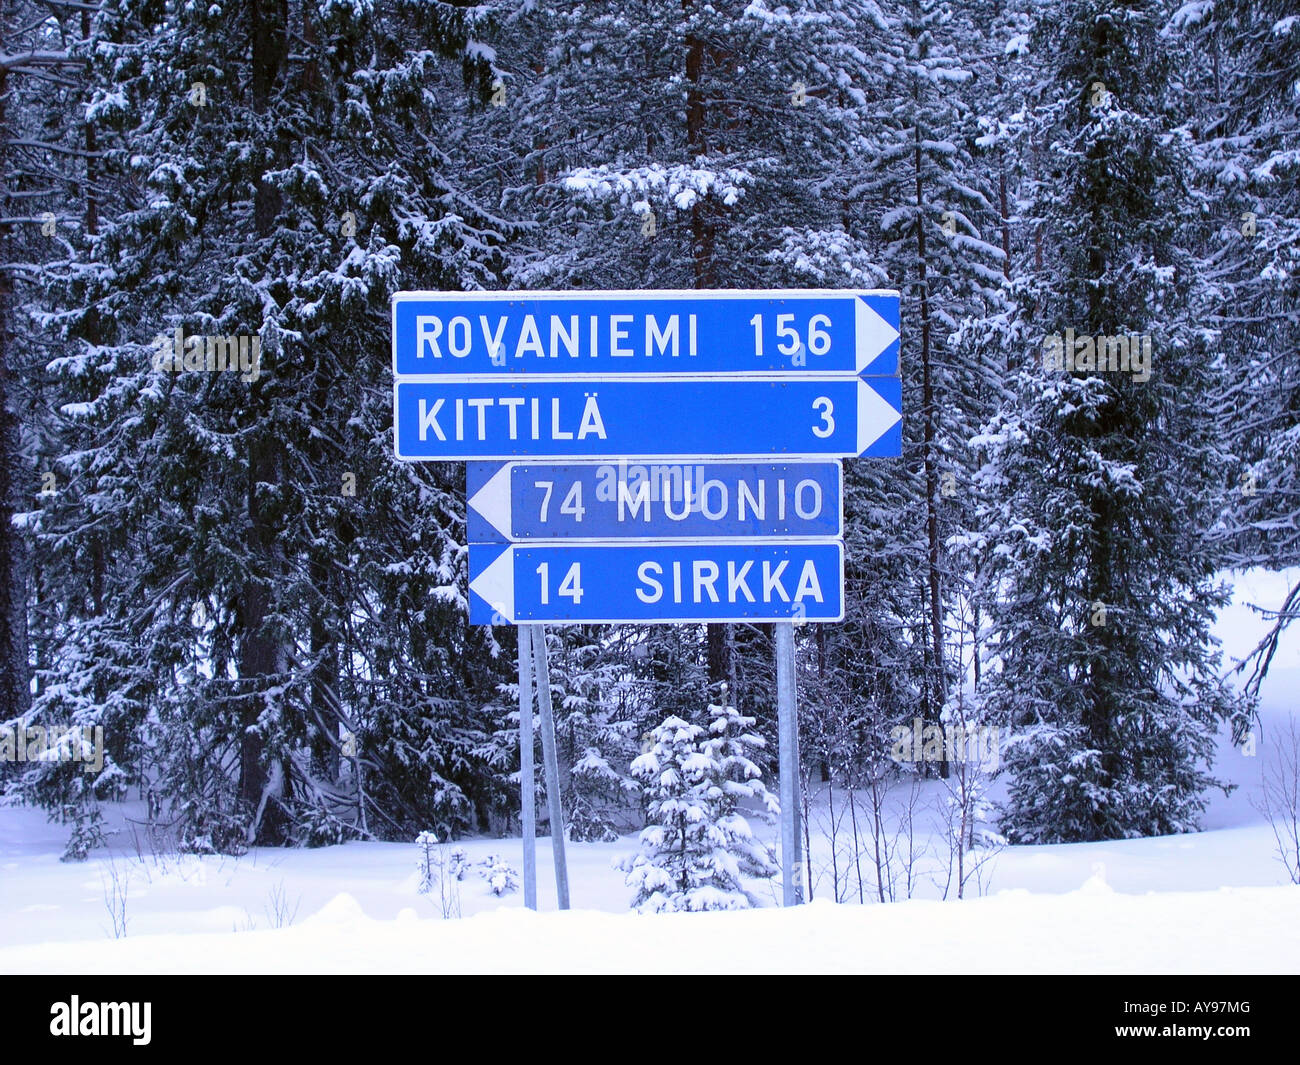 ROAD SIGN GIVING DIRECTIONS TO ROVANIEMI, KITTILA, MUONIO AND SIRKKA, FINLAND Stock Photo